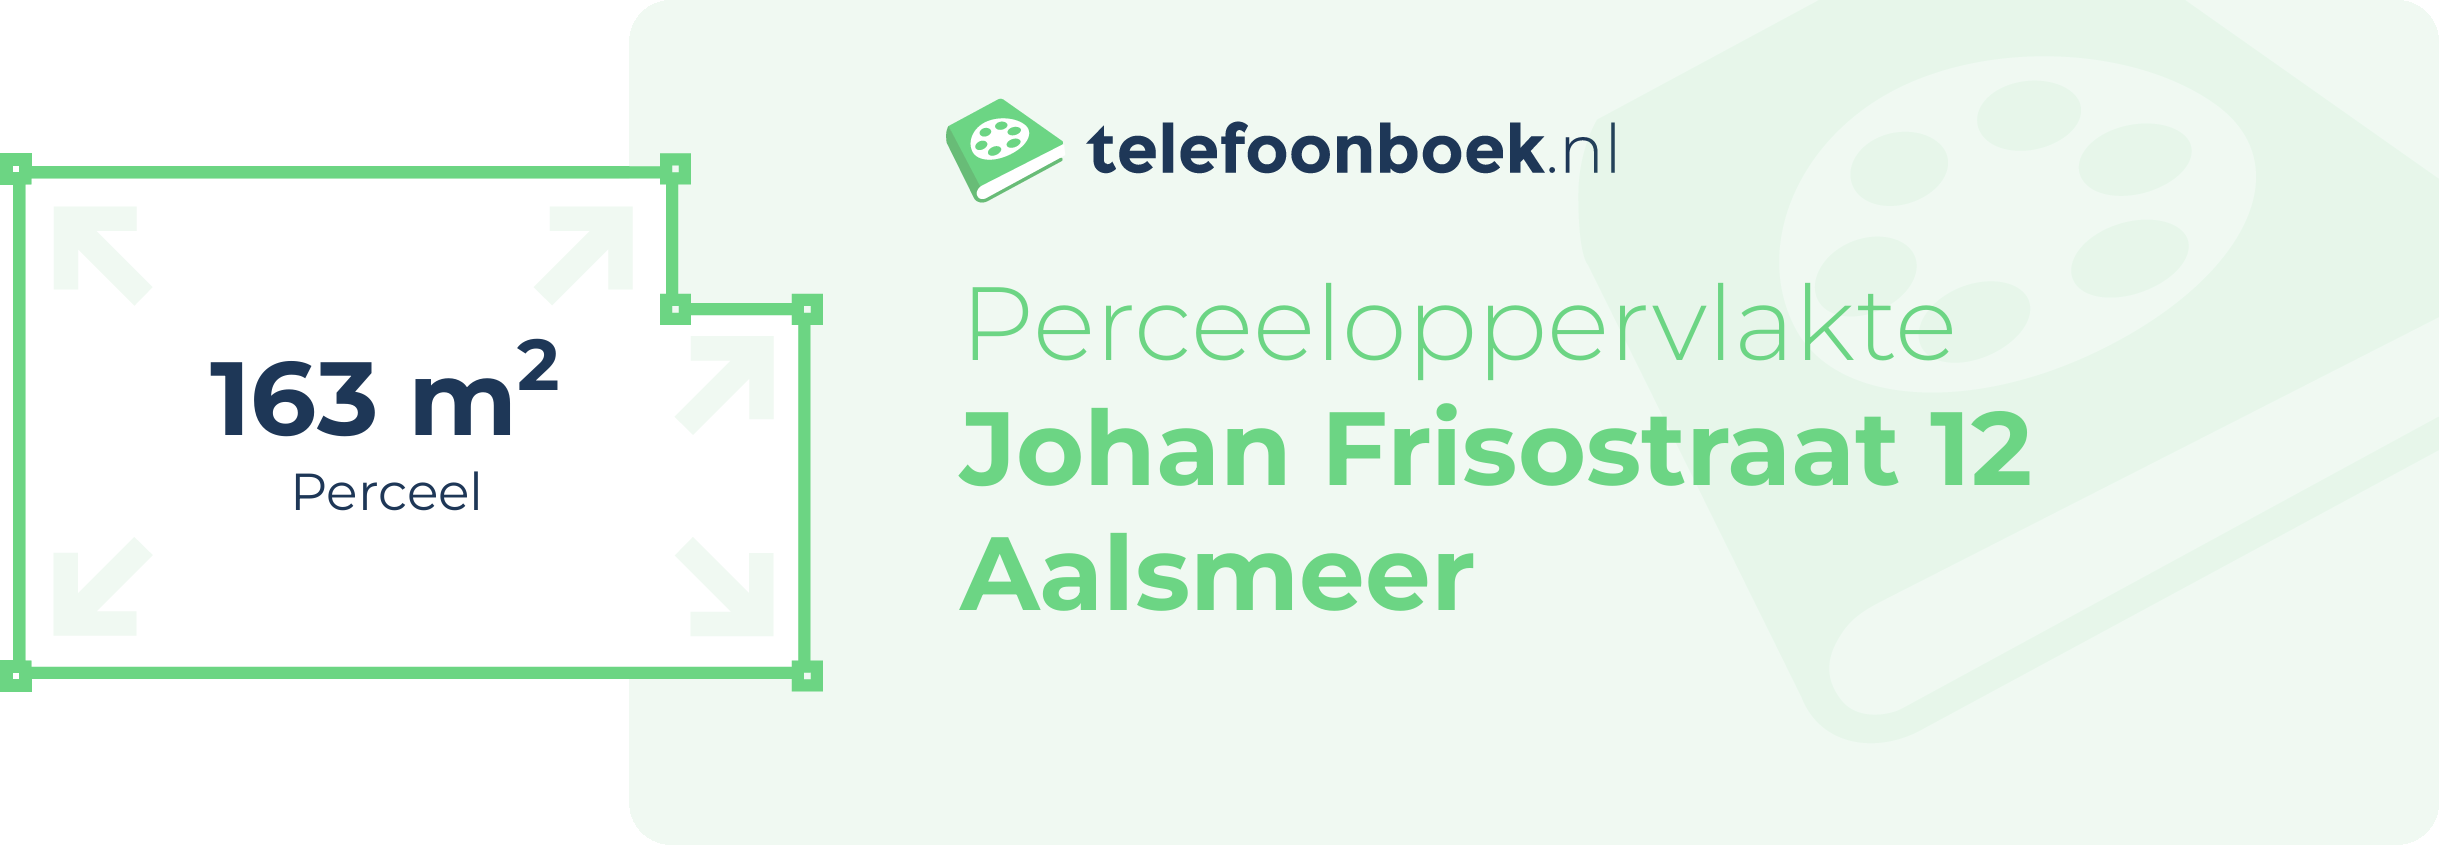 Perceeloppervlakte Johan Frisostraat 12 Aalsmeer